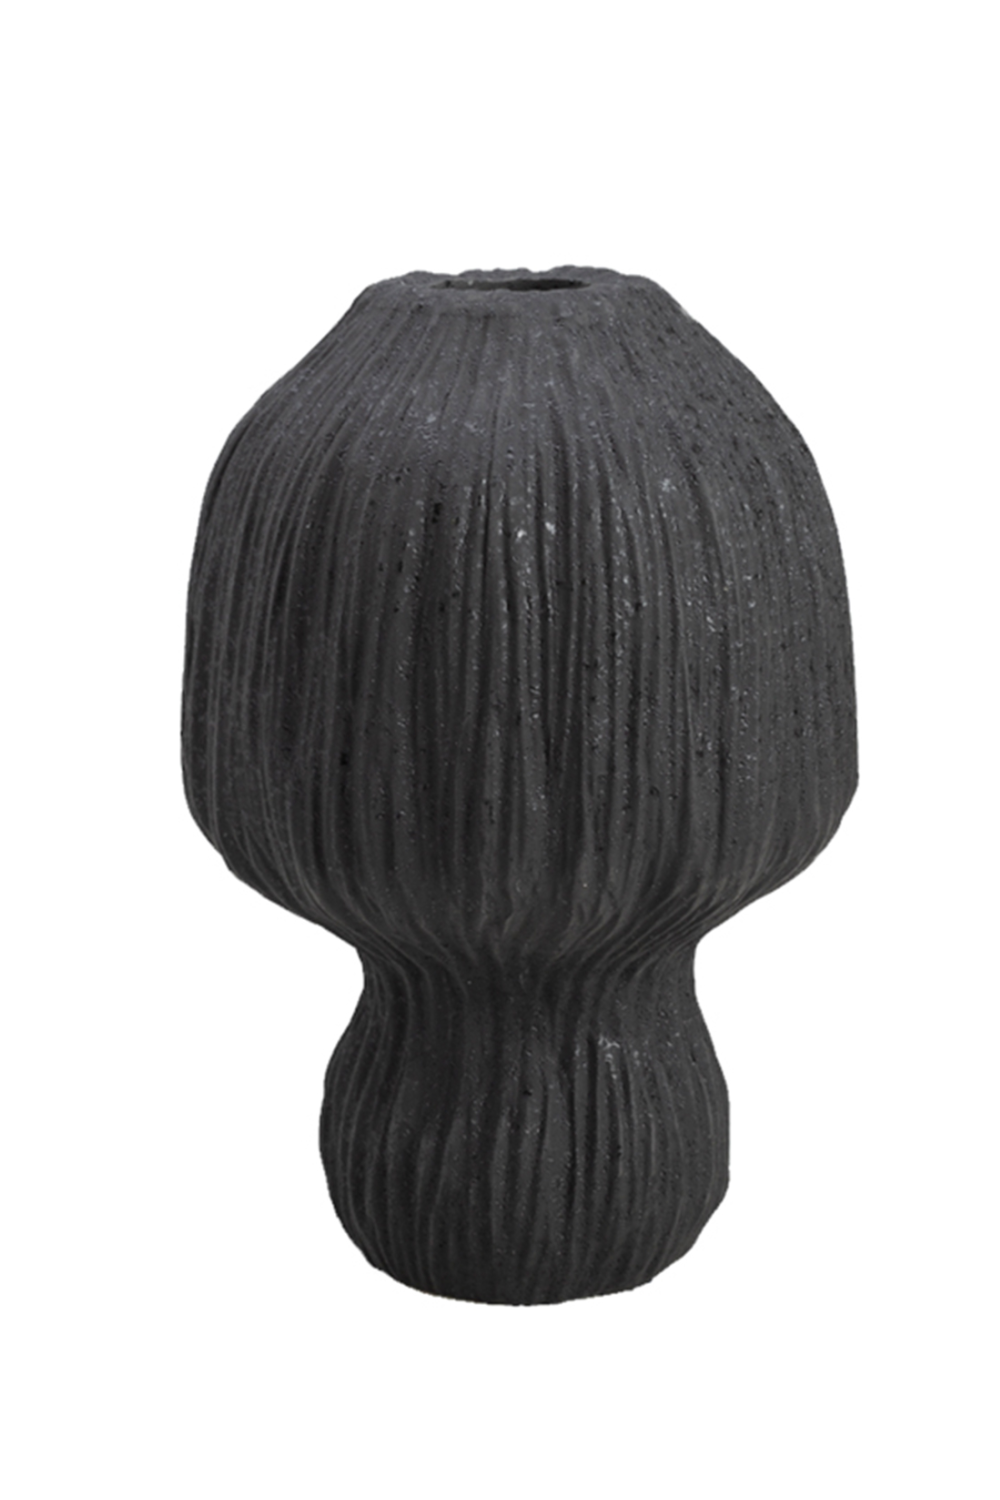 Black Hand-Casted Textured Vase | Liang & Eimil Morel | OROA.com